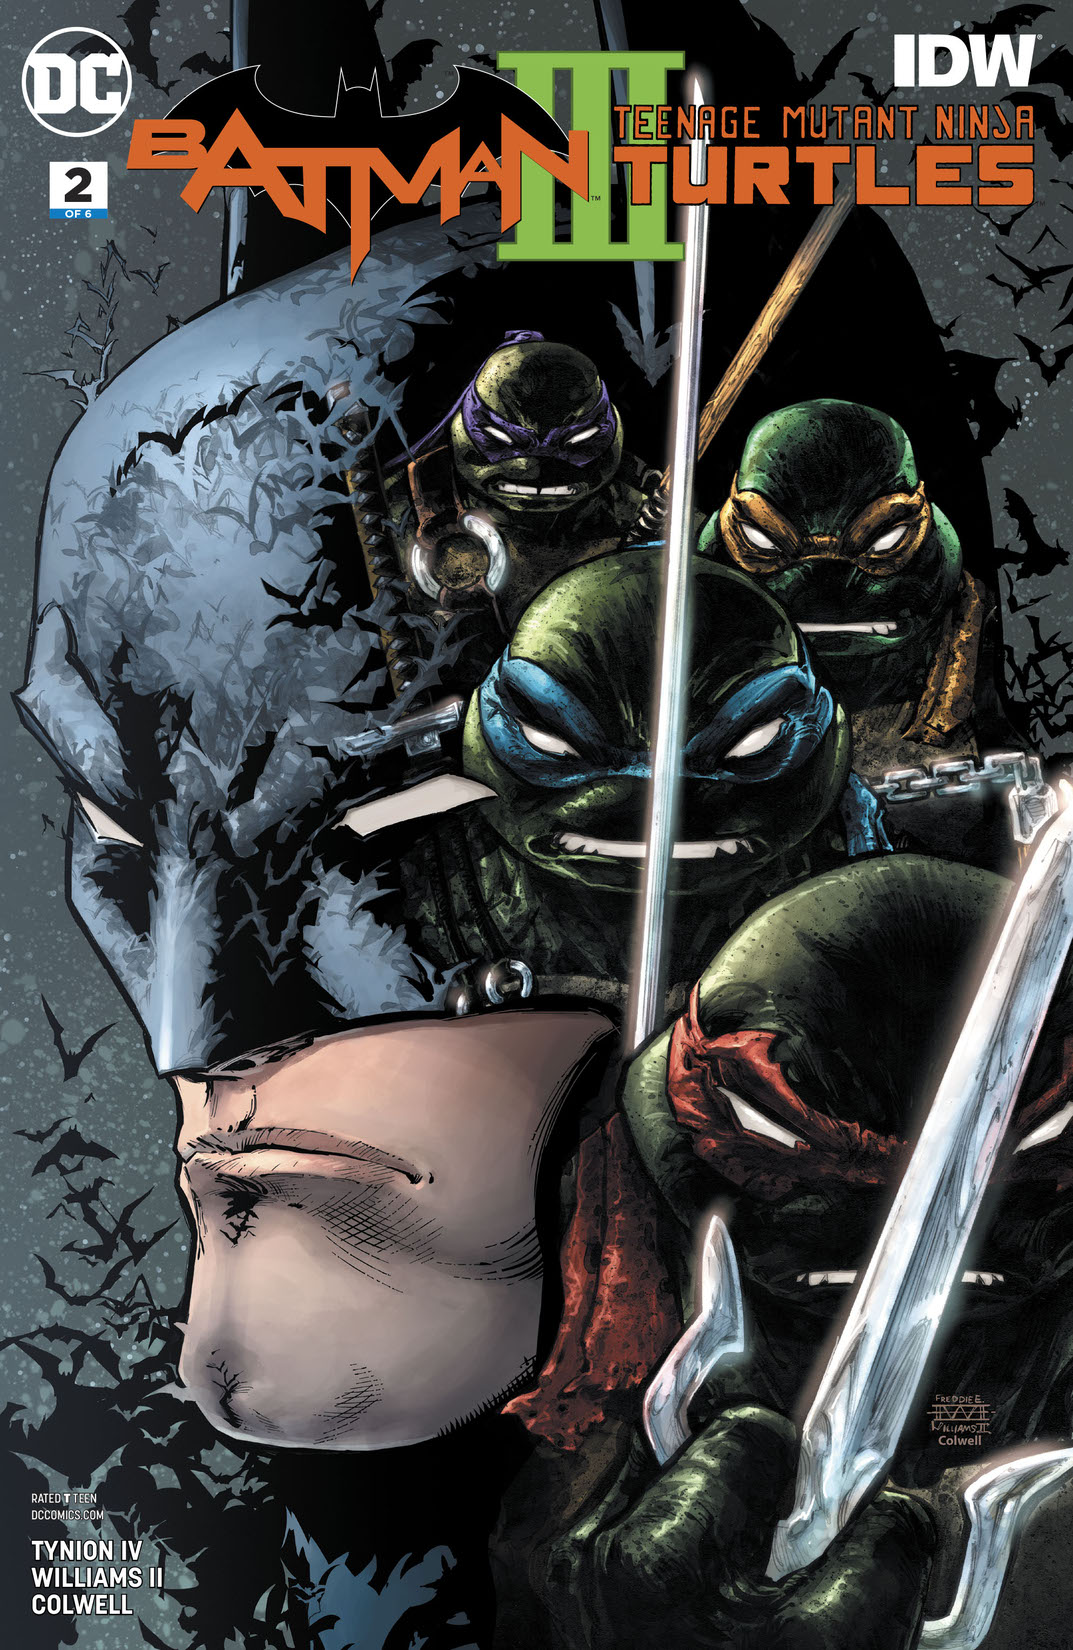 Batman/Teenage Mutant Ninja Turtles III #2 preview images